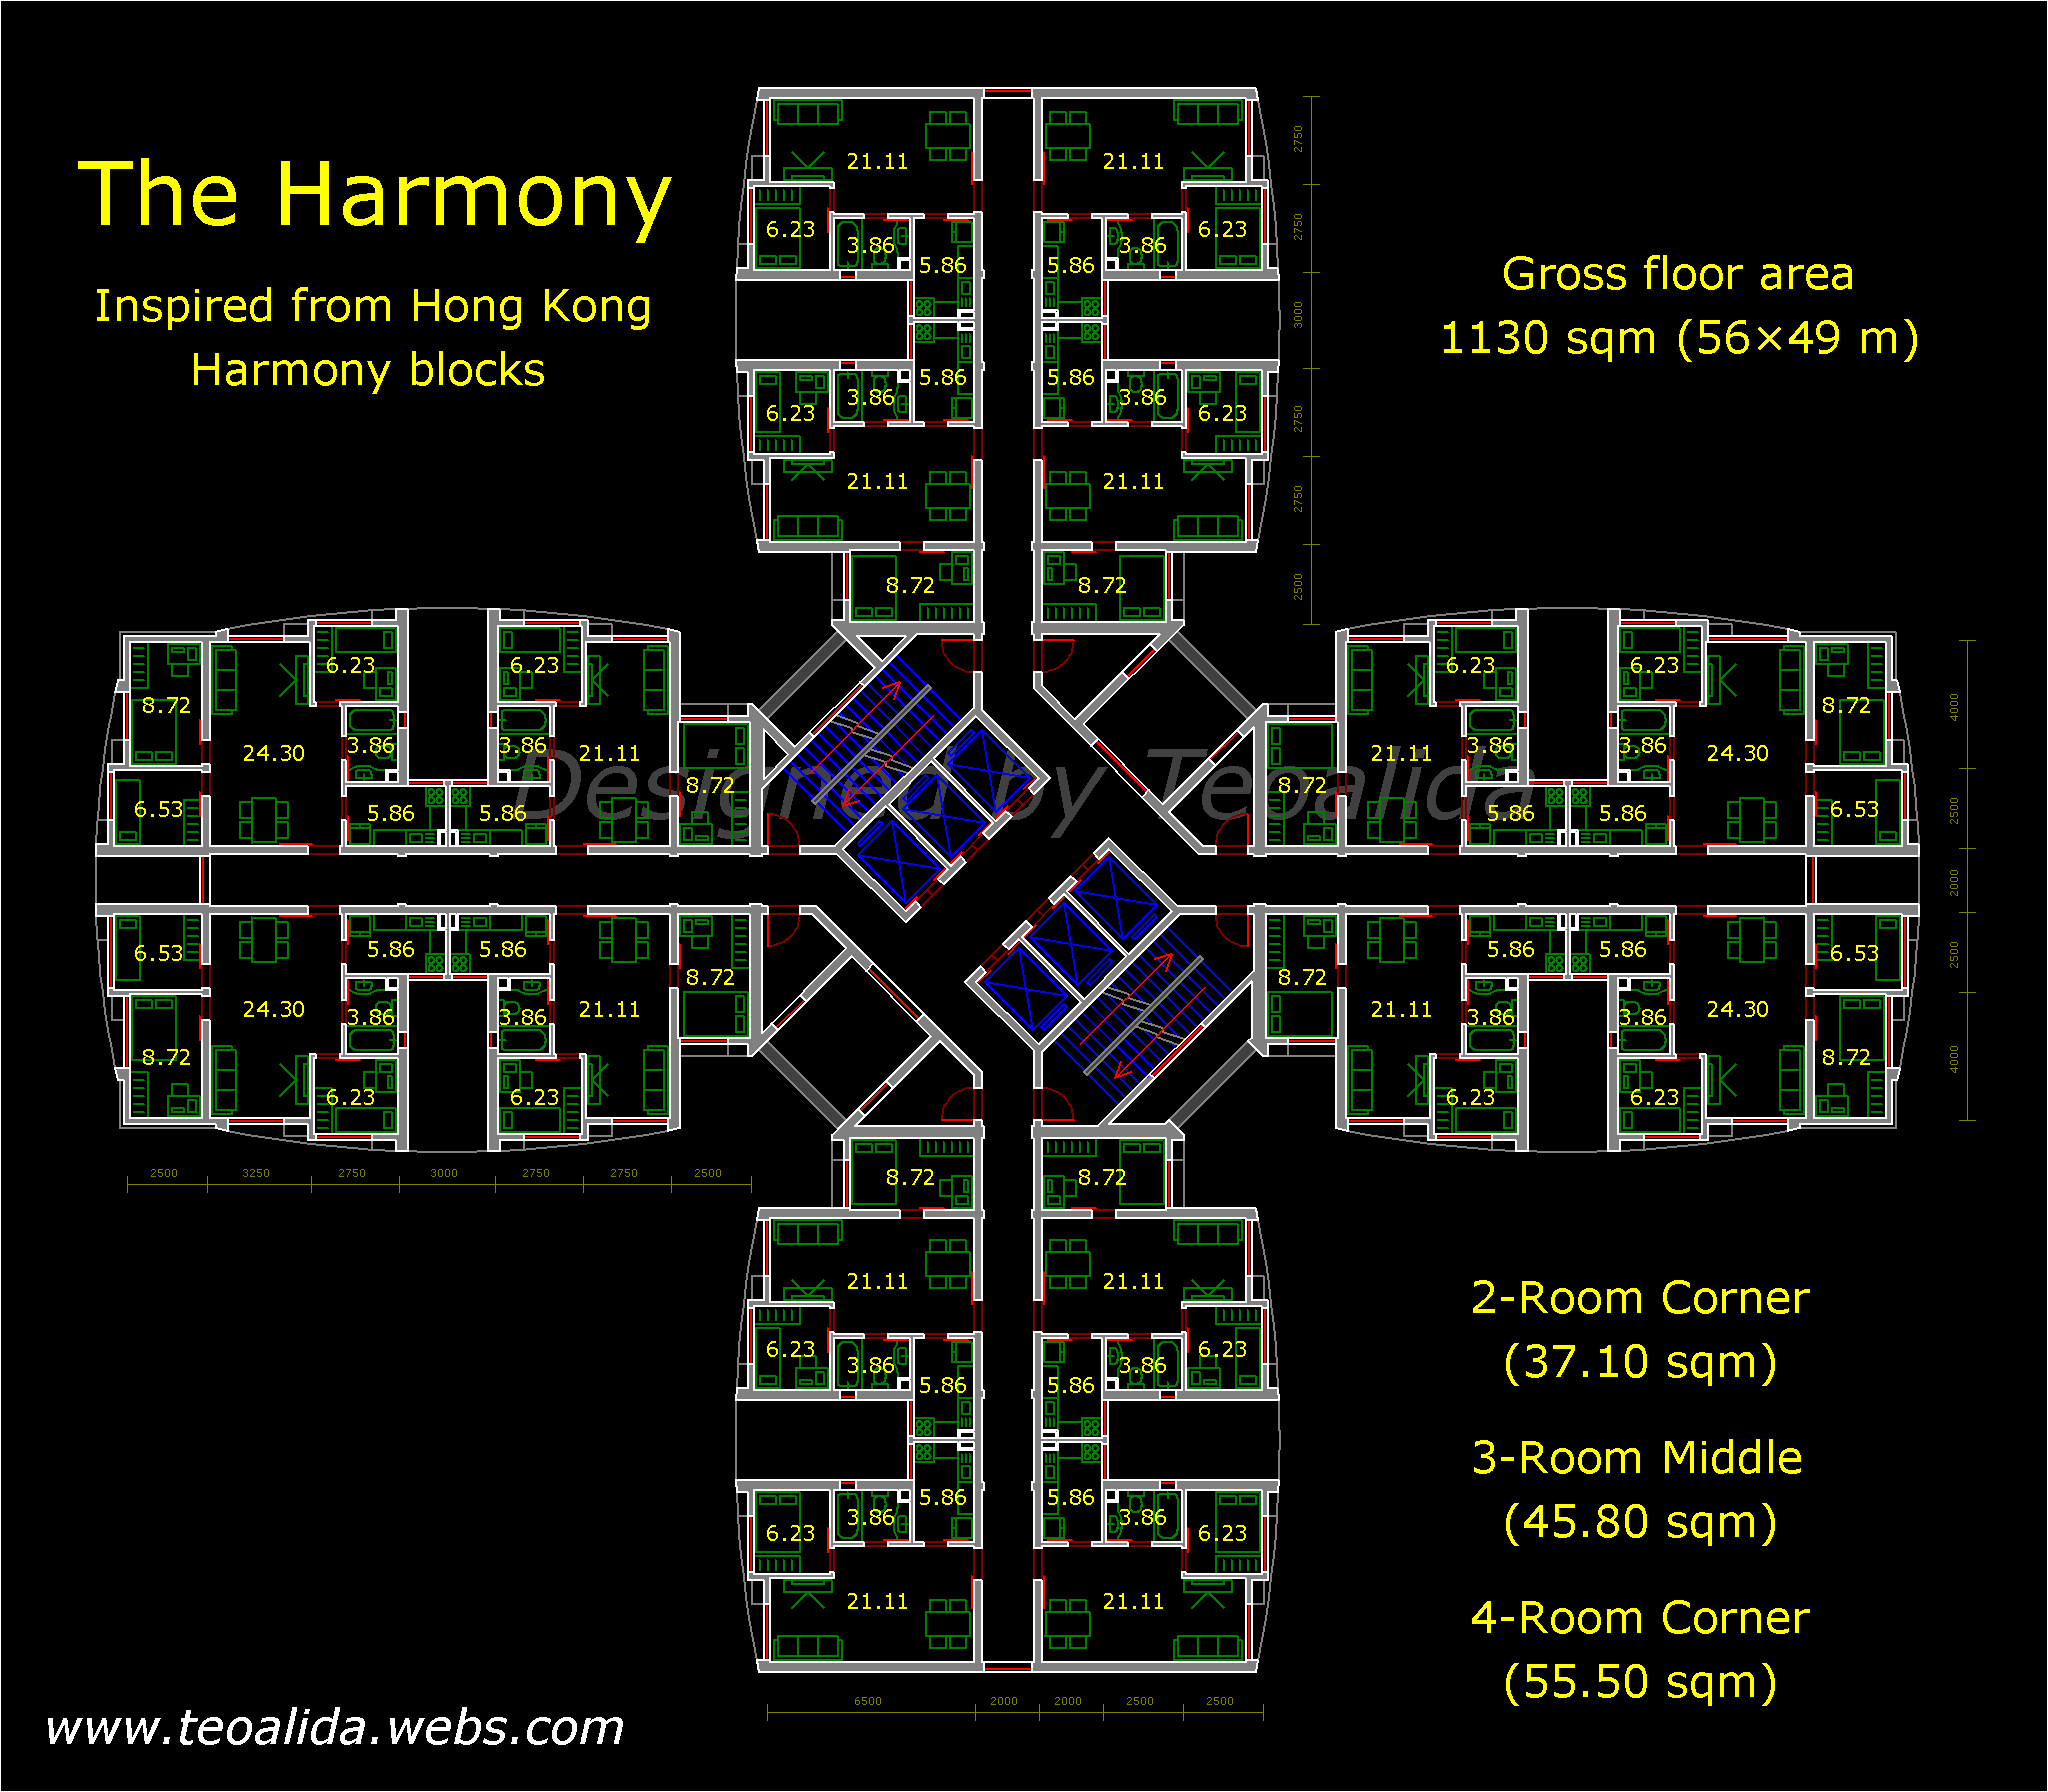 HK Harmony